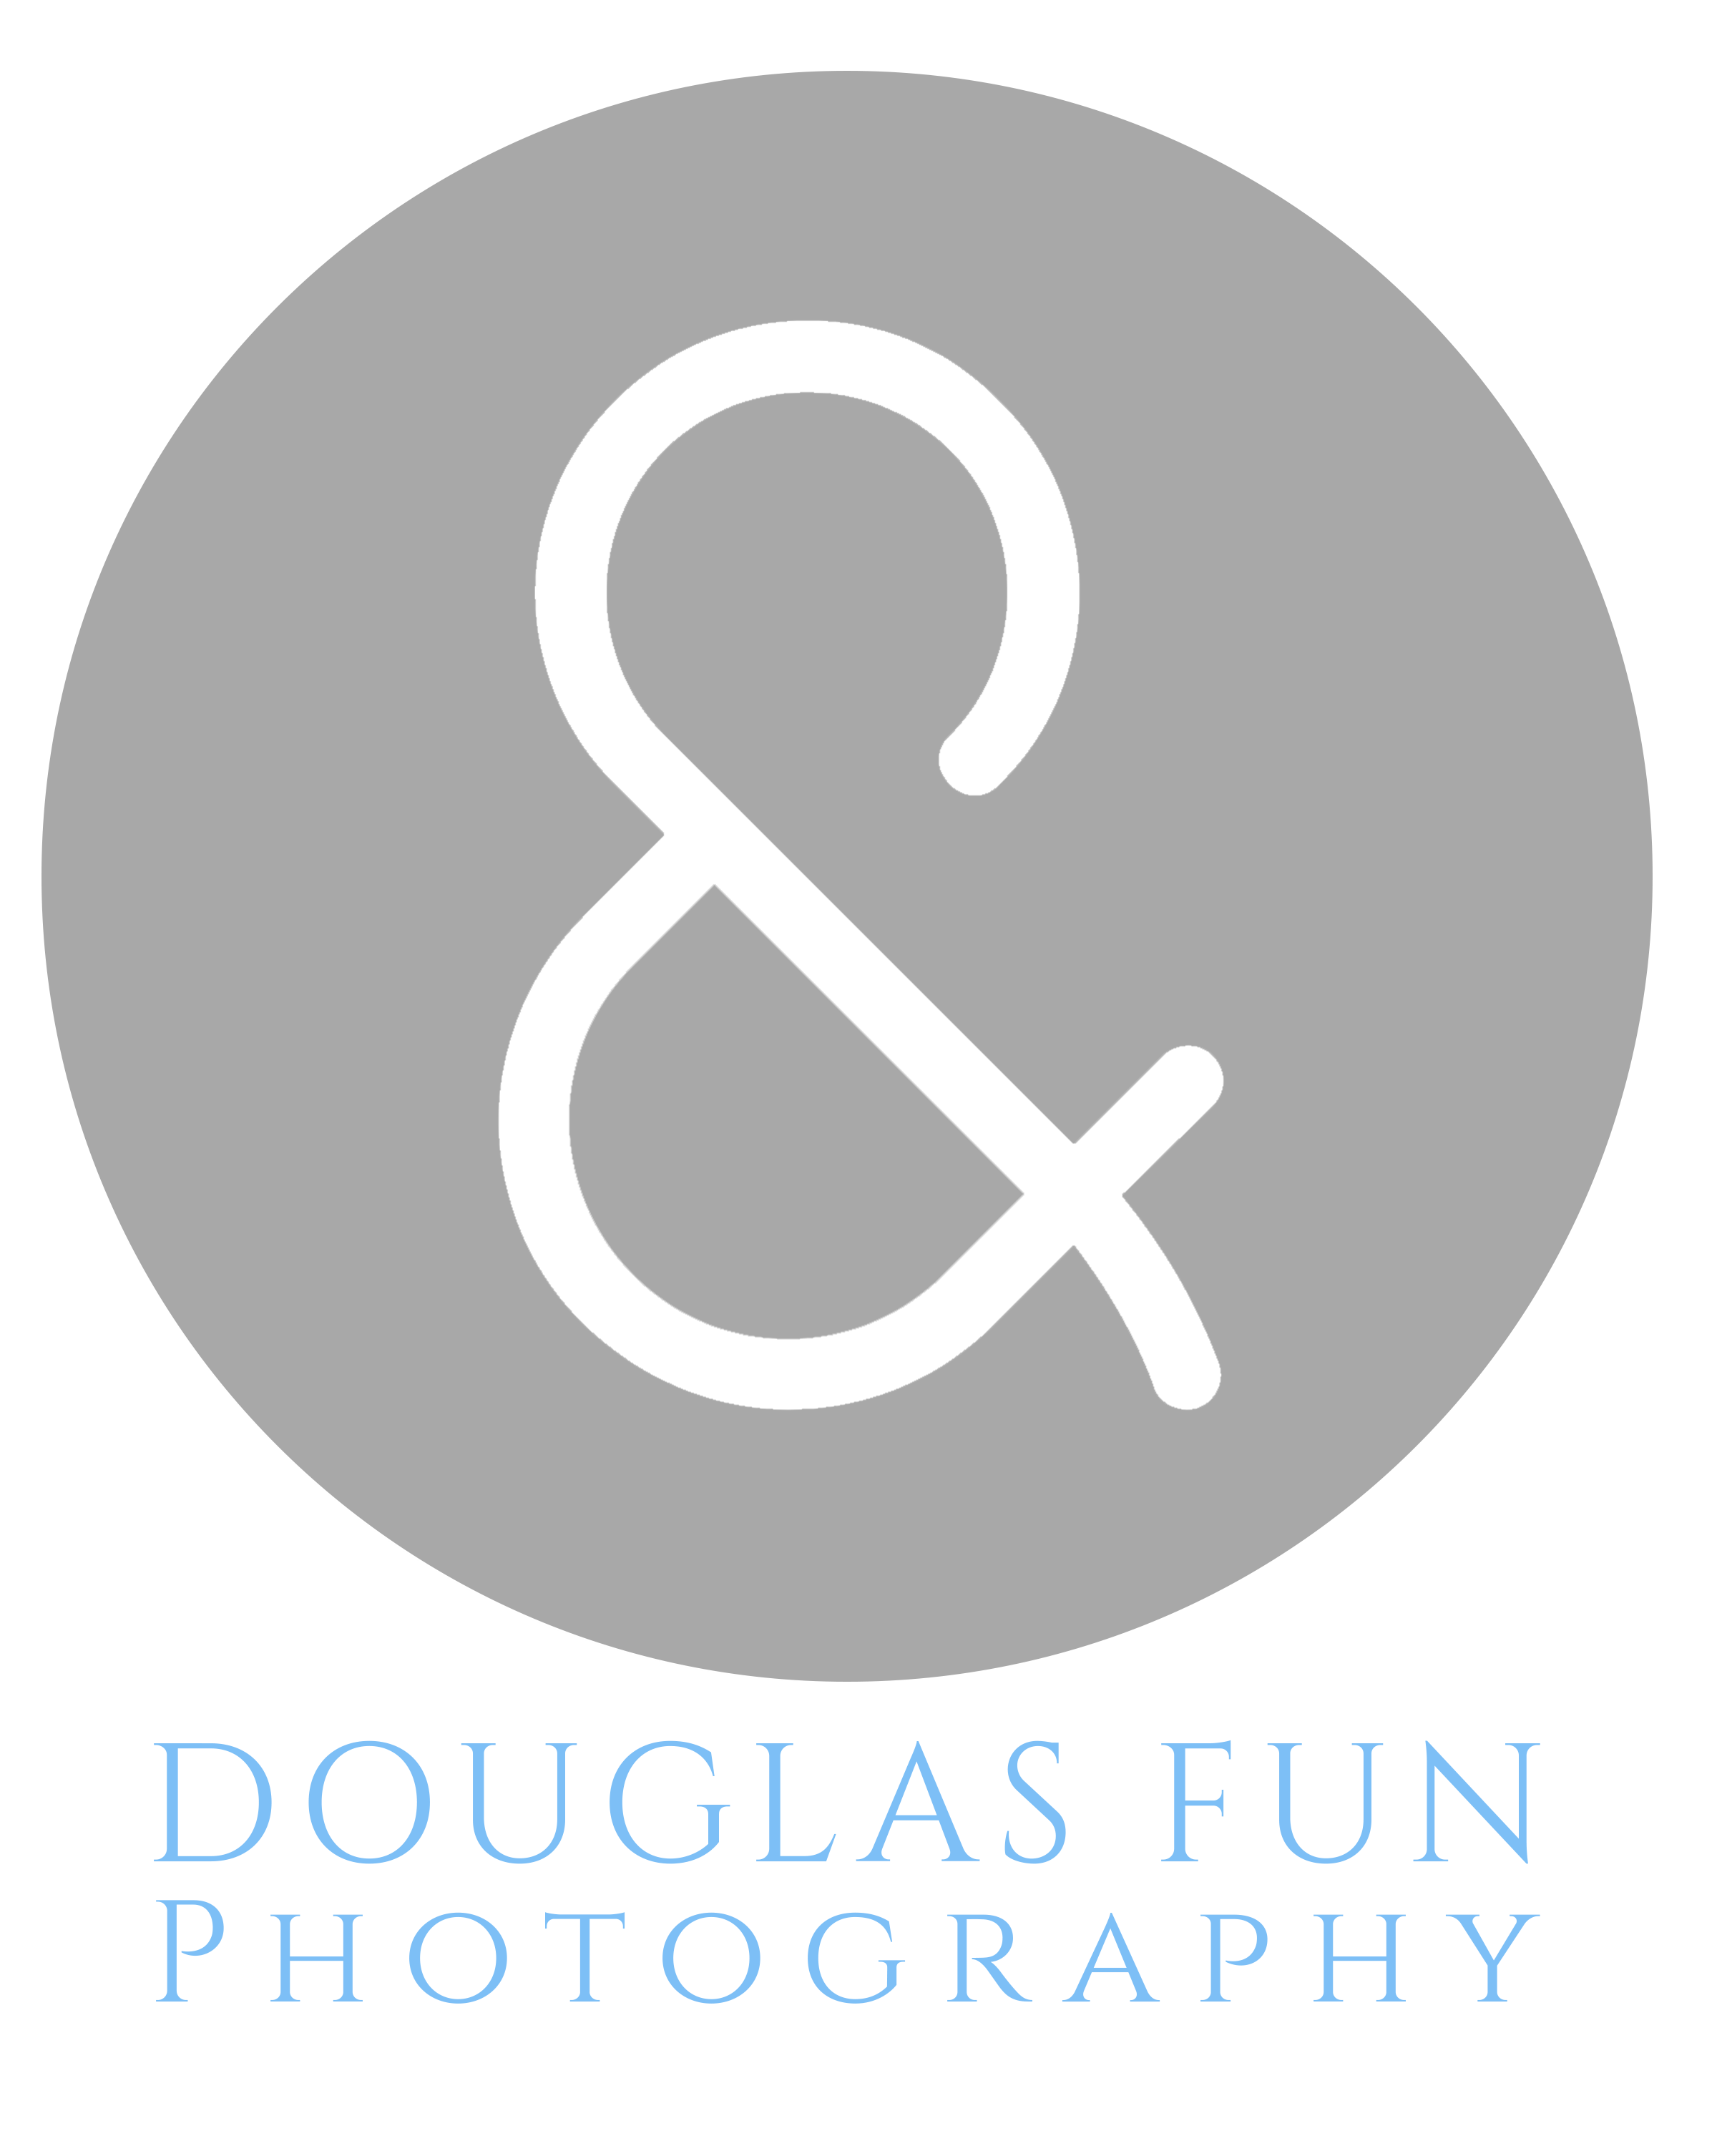 Douglas Fun